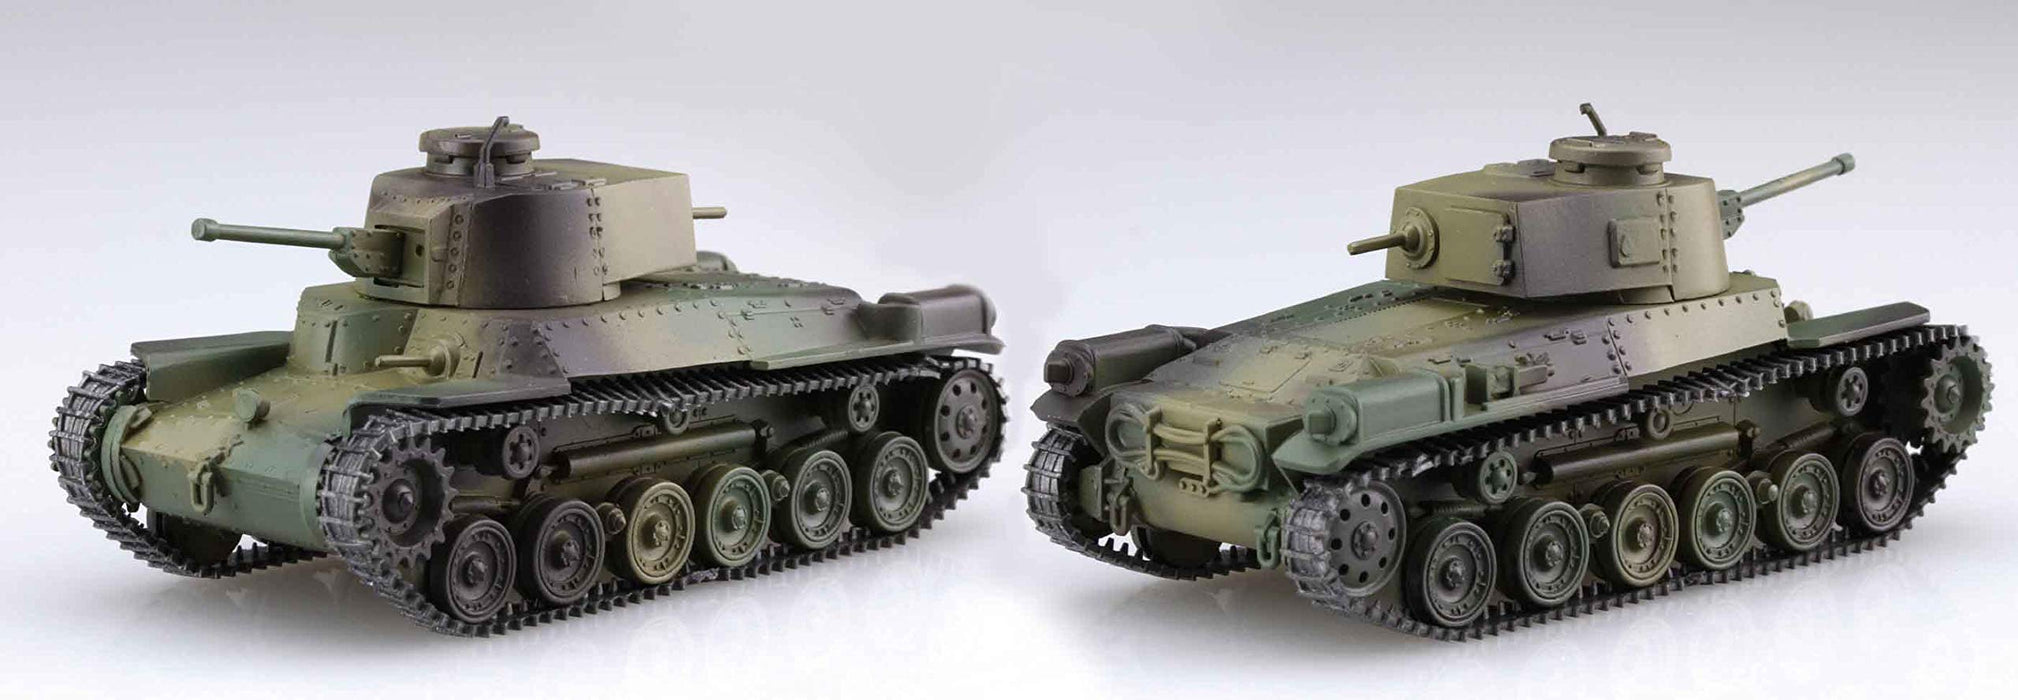 FUJIMI Special World Armor 1/76 Mittlerer Panzer Typ 97 Chi-Ha Kai 2-teilige Spezialversion mit Infanterie-Kunststoffmodell